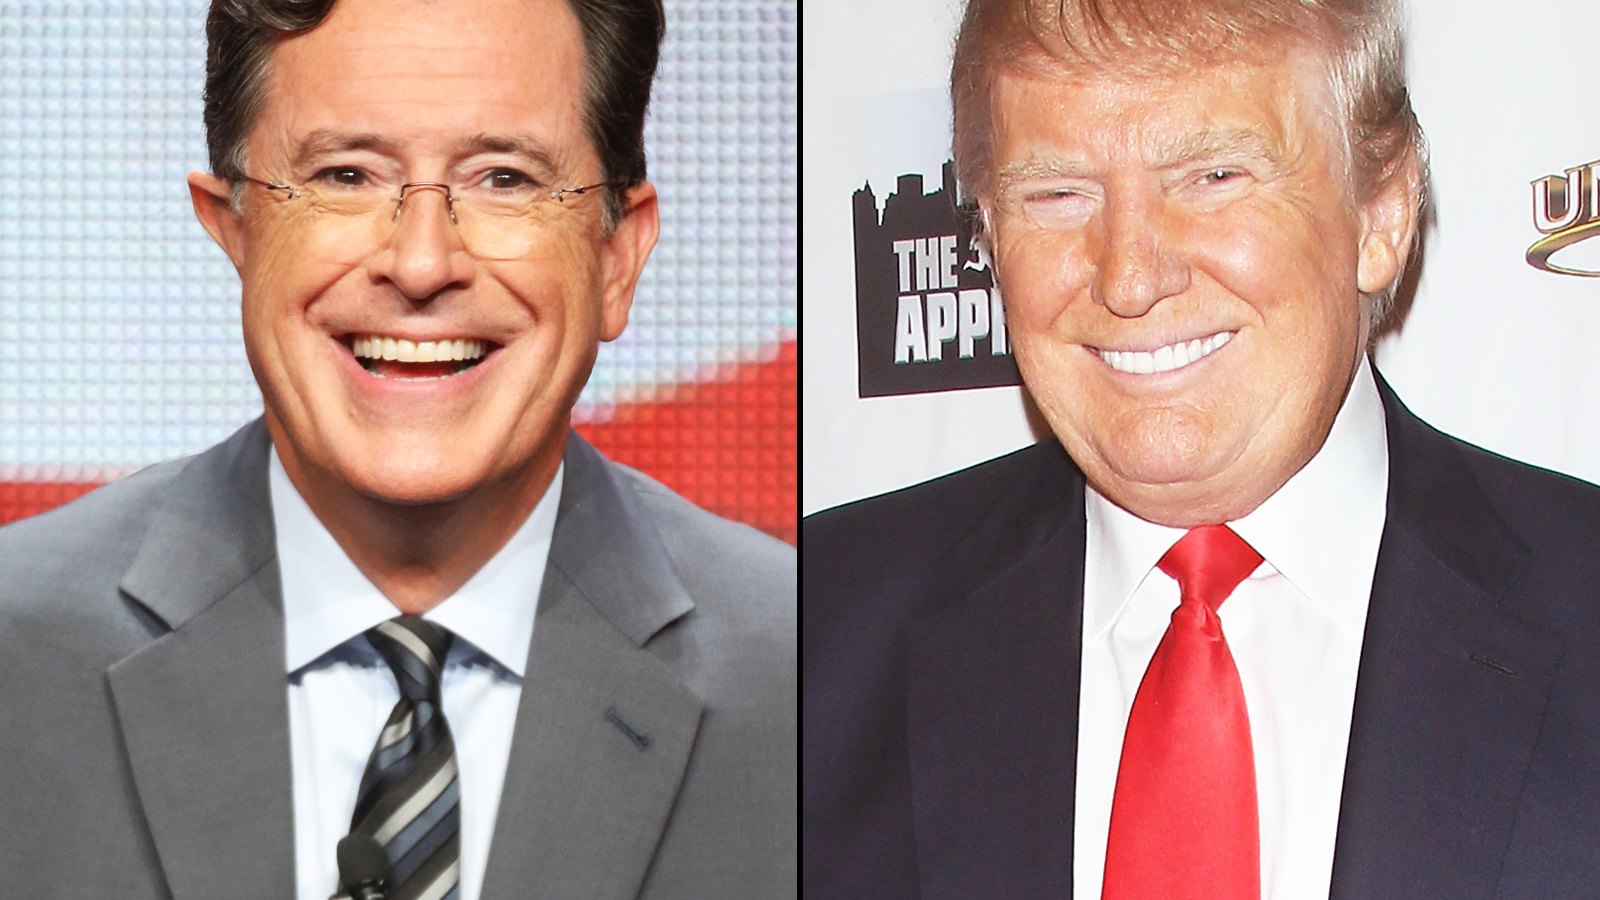 Stephen Colbert and Donald Trump